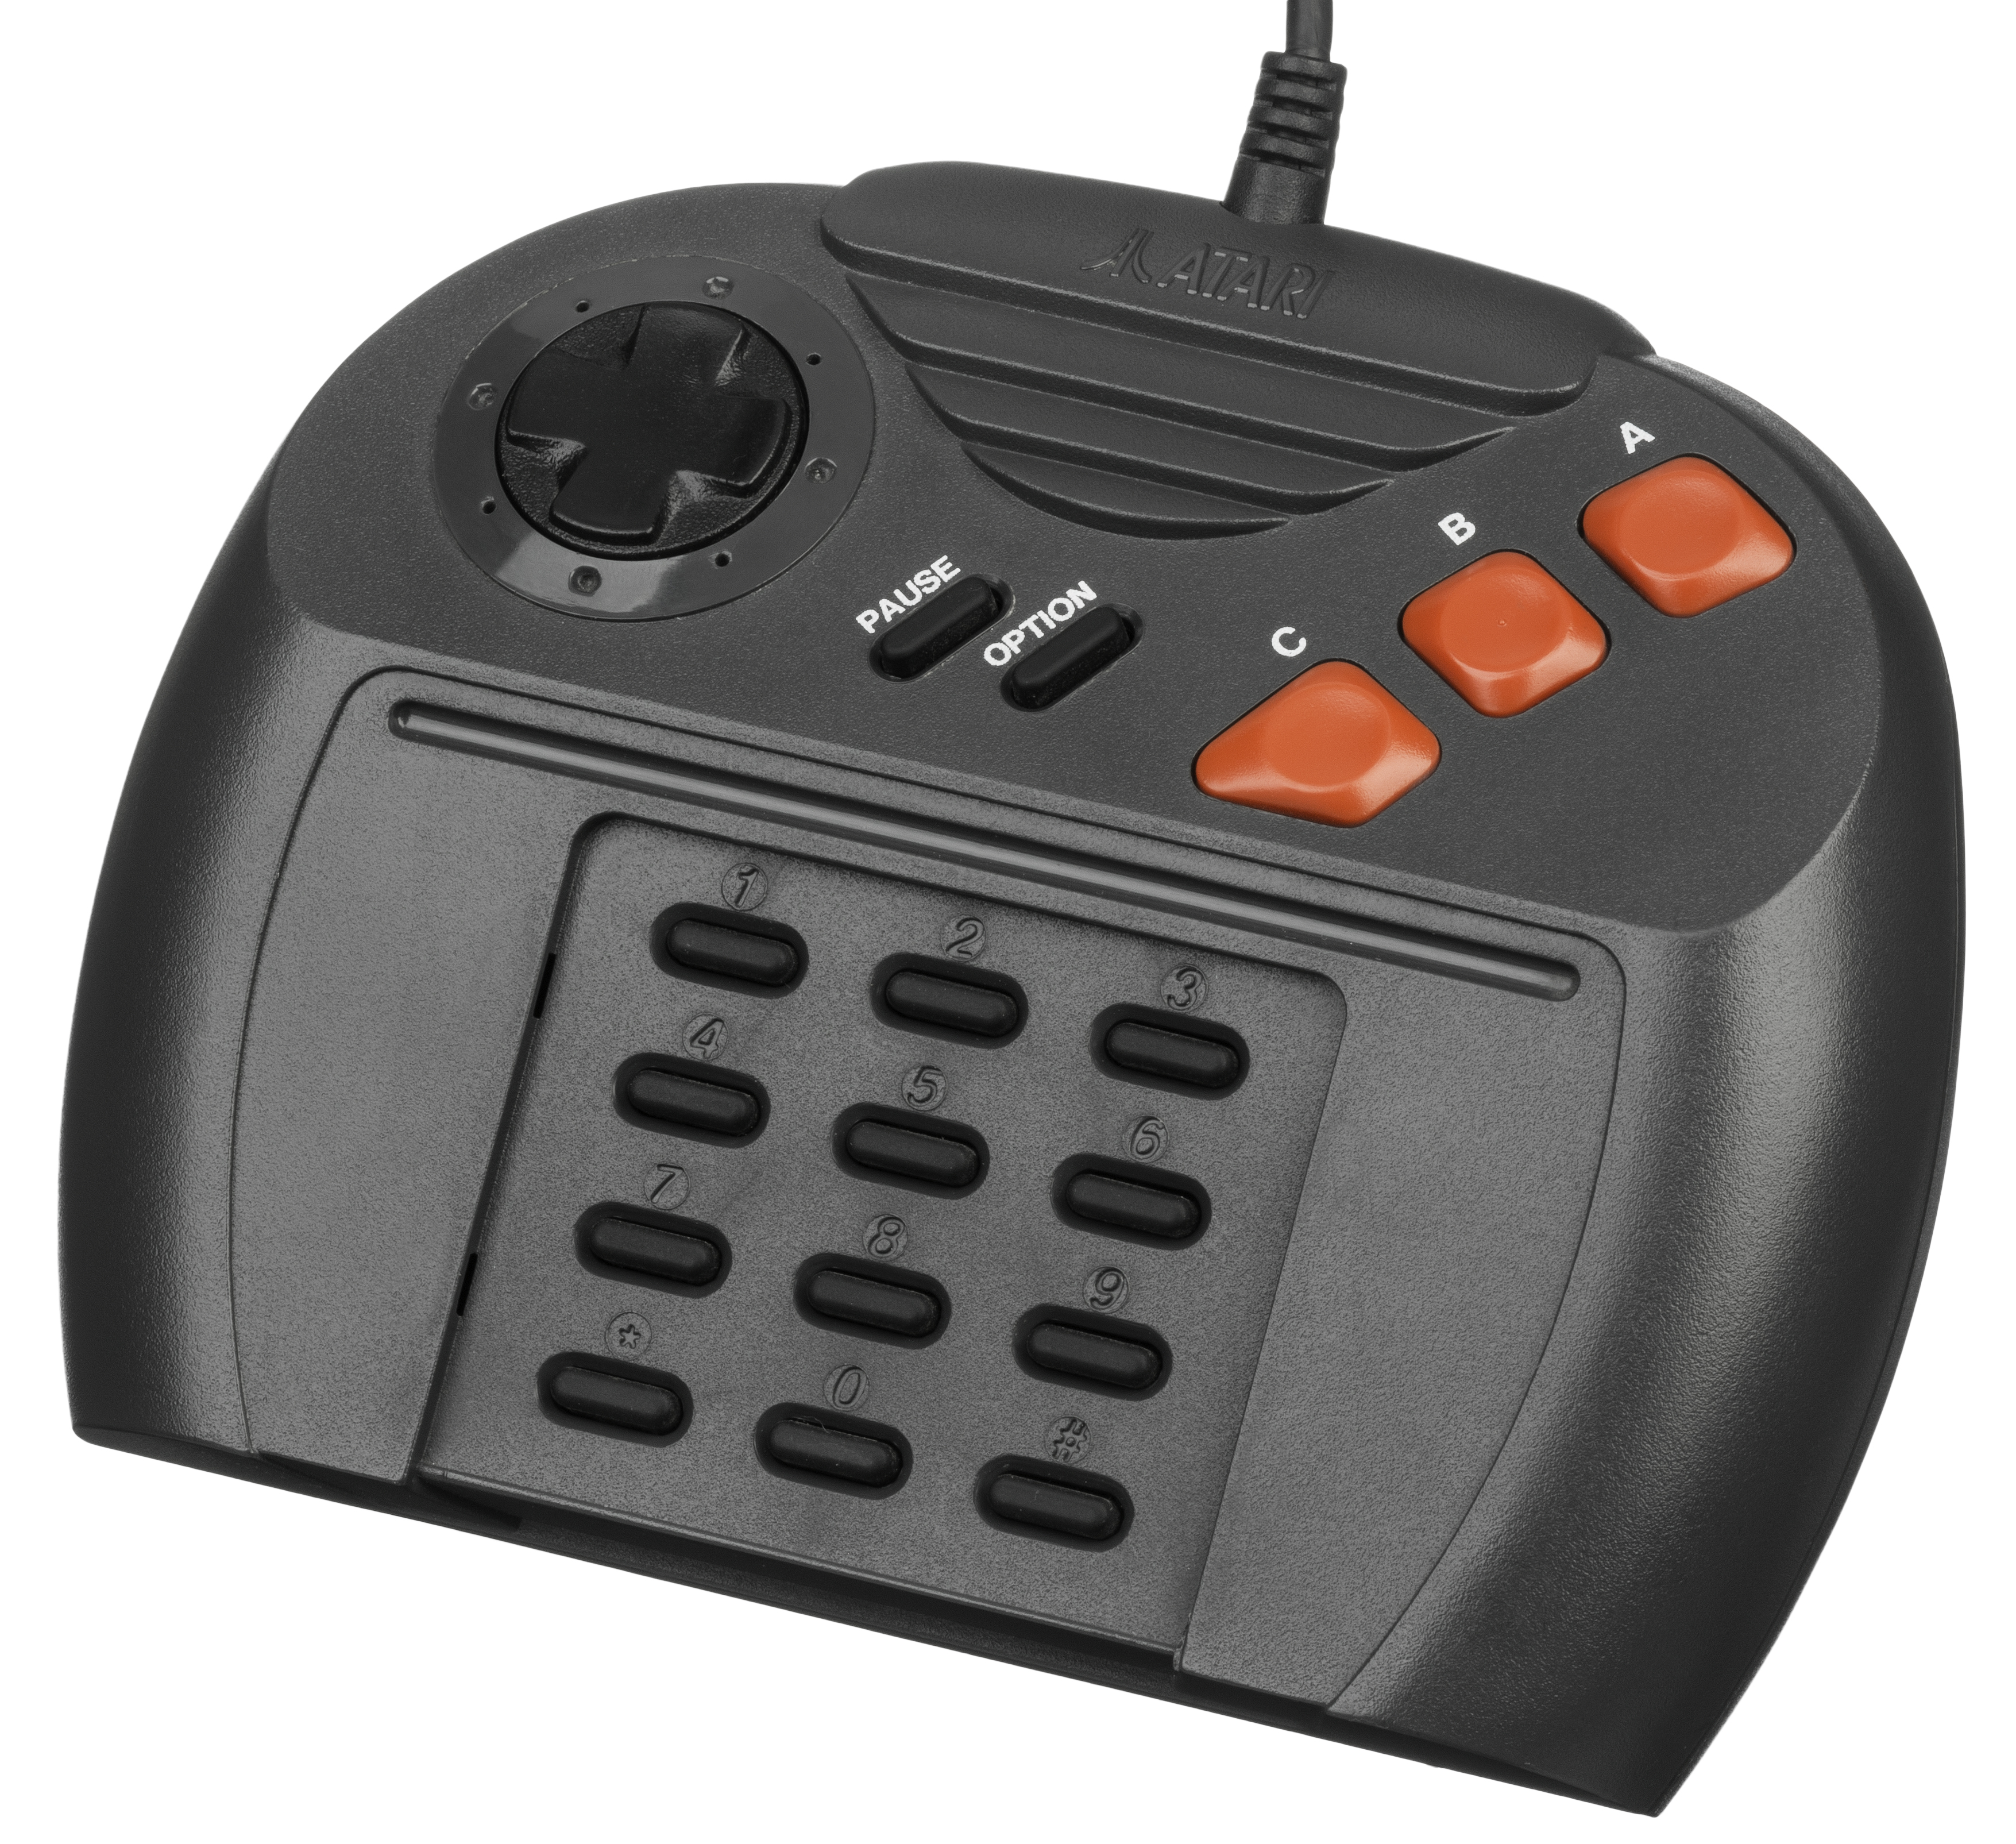 https://upload.wikimedia.org/wikipedia/commons/e/ea/Atari-Jaguar-Controller.jpg